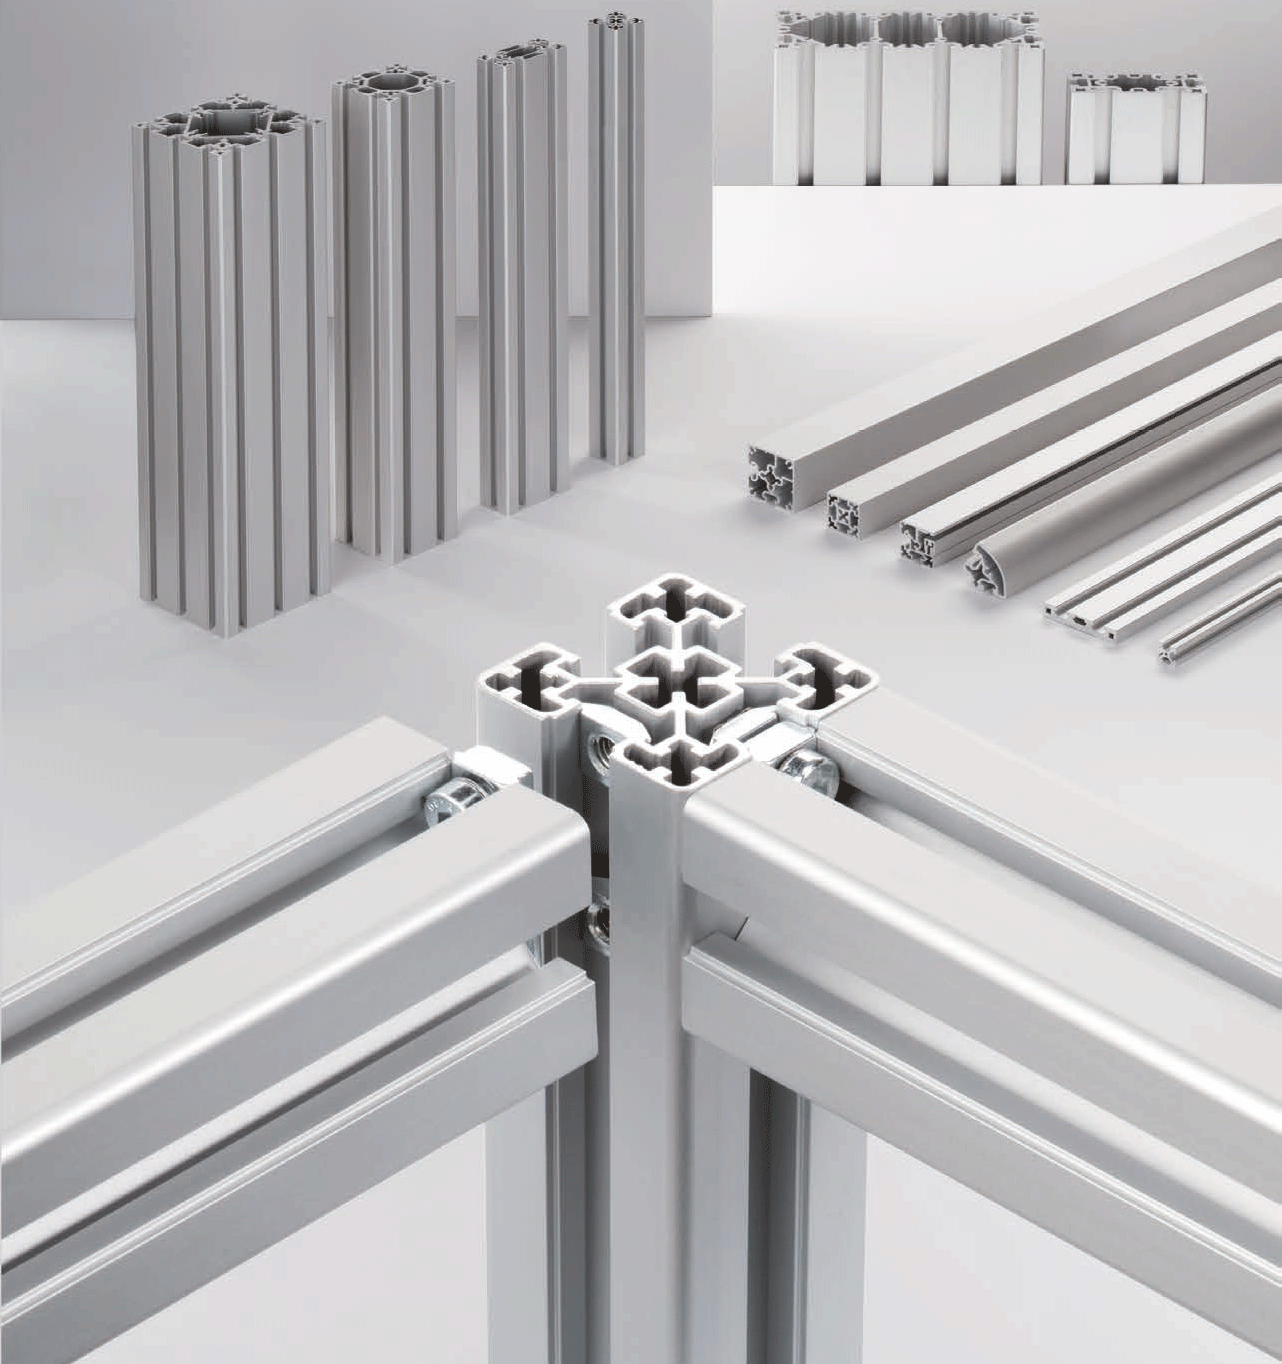 Aluminium Profile systems